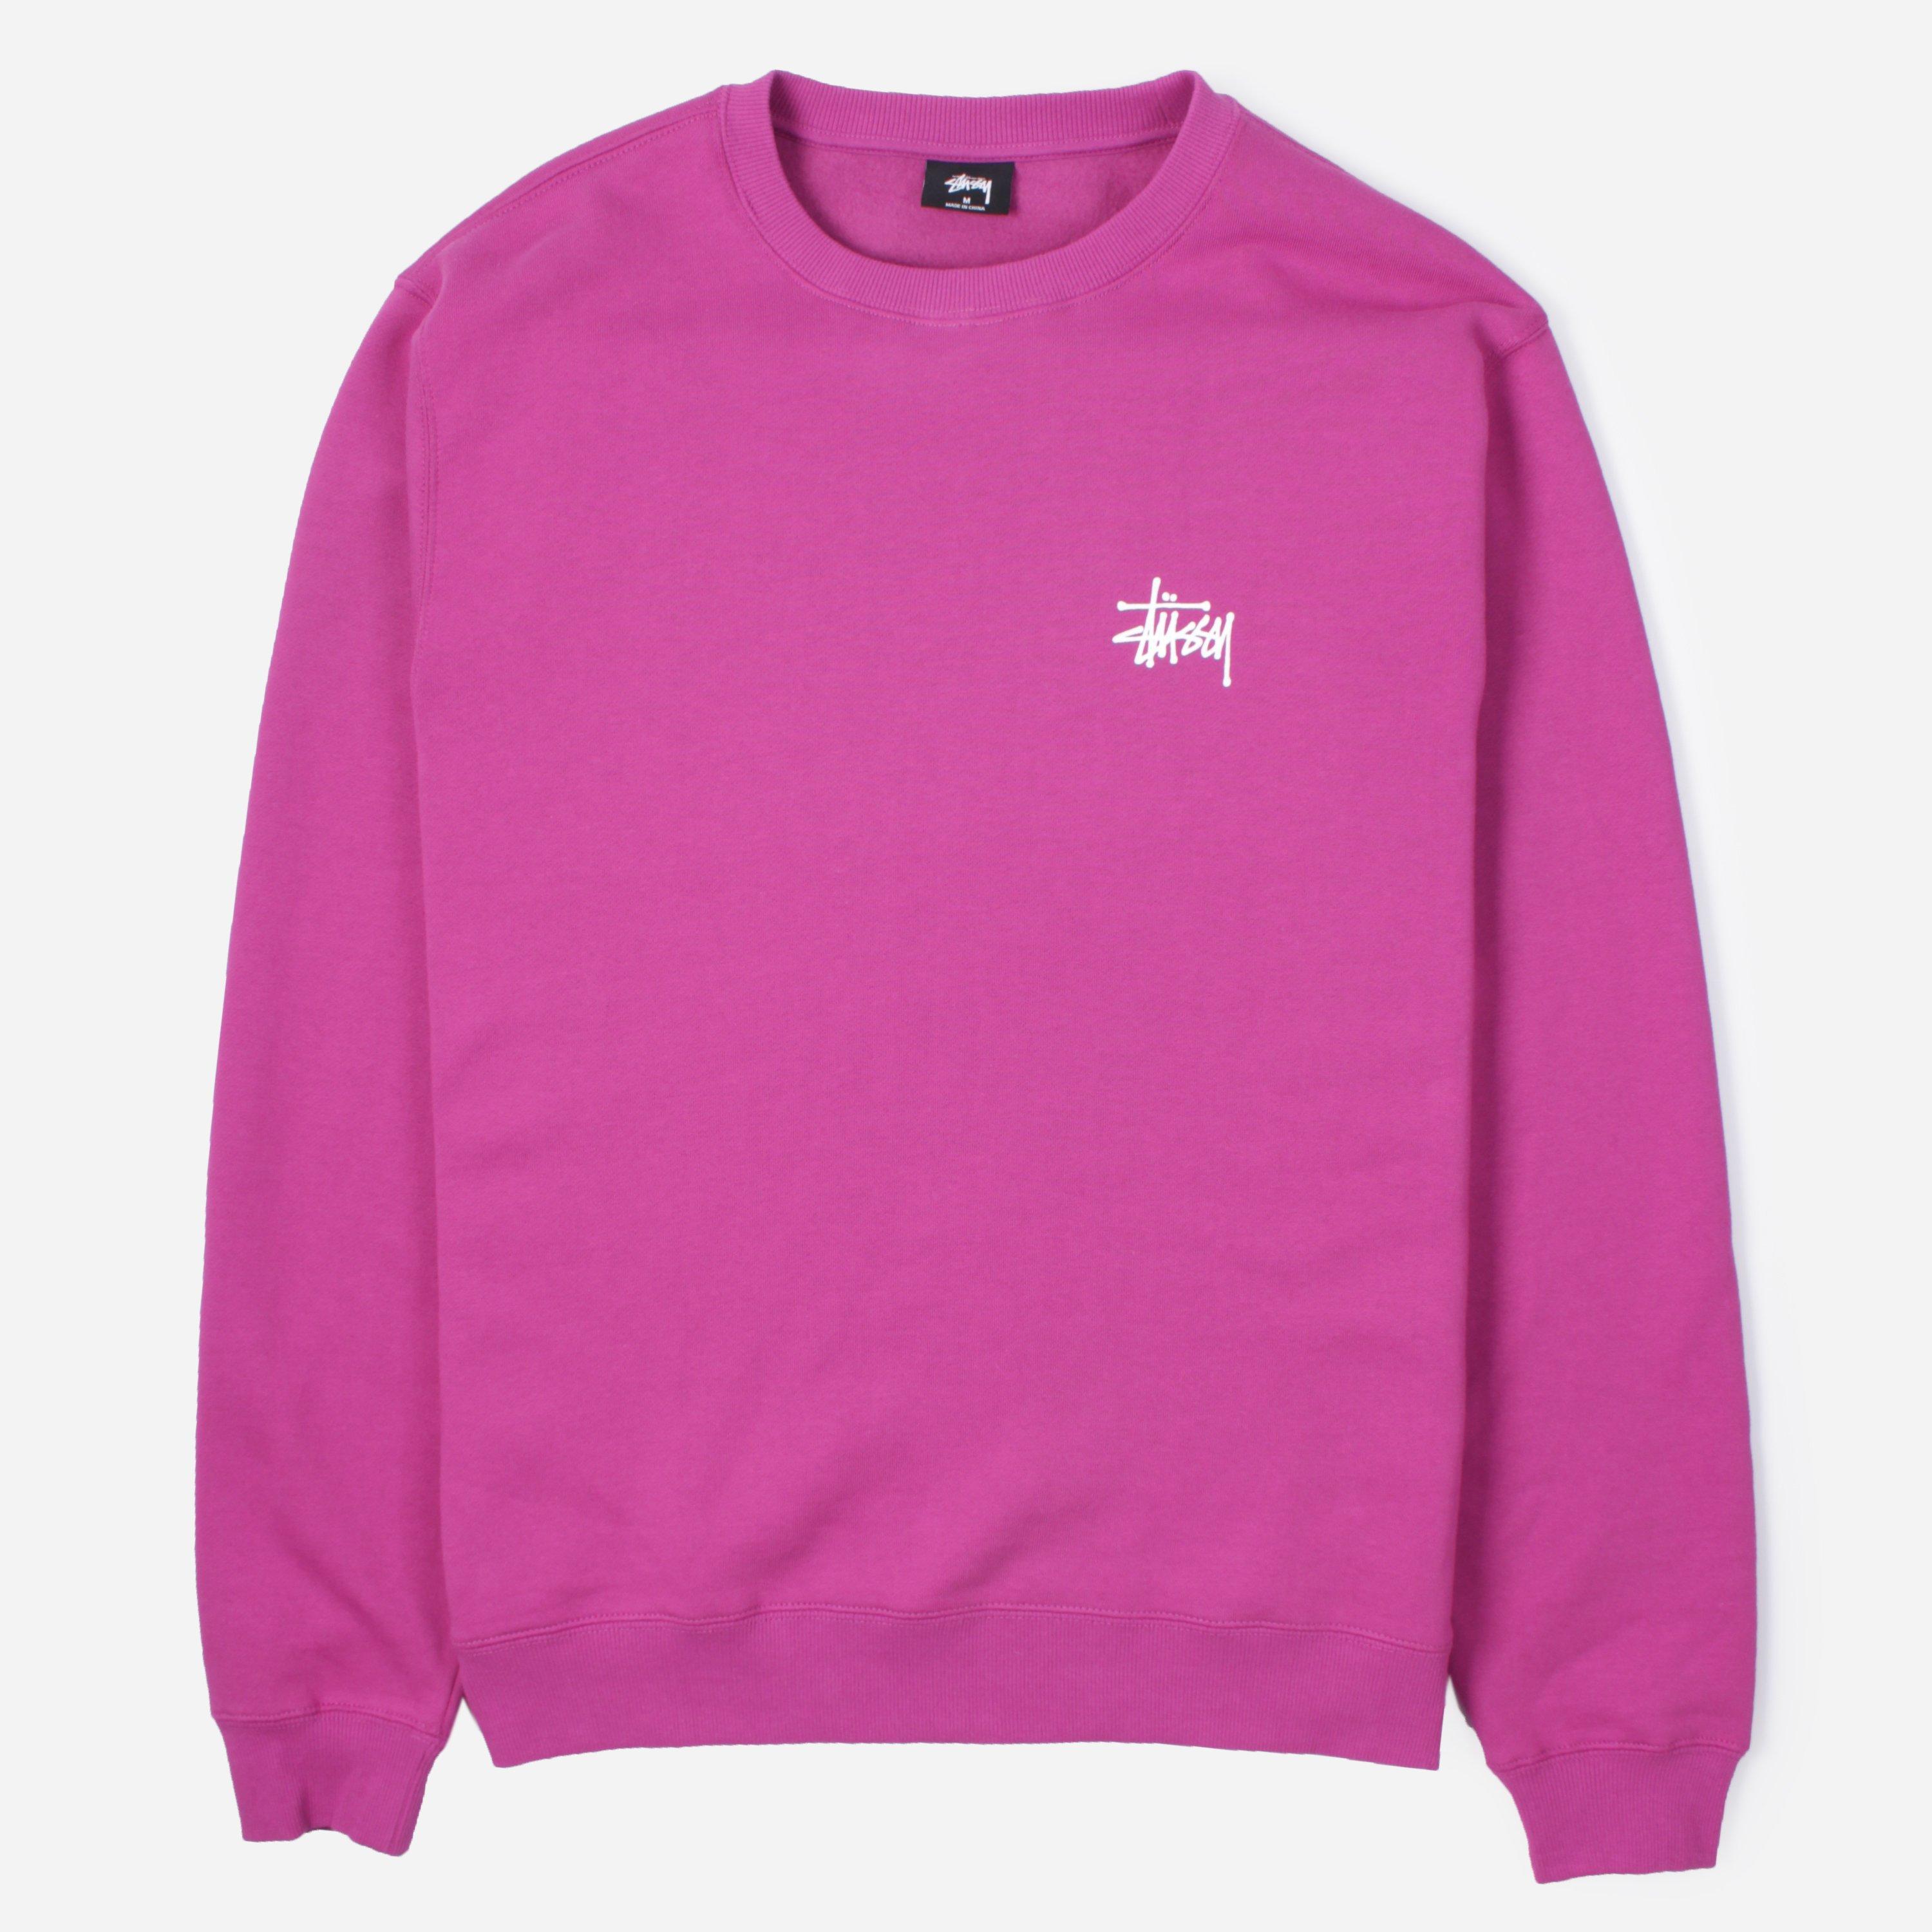 Stussy Basic Crew Sweatshirt in Pink for Men - Lyst